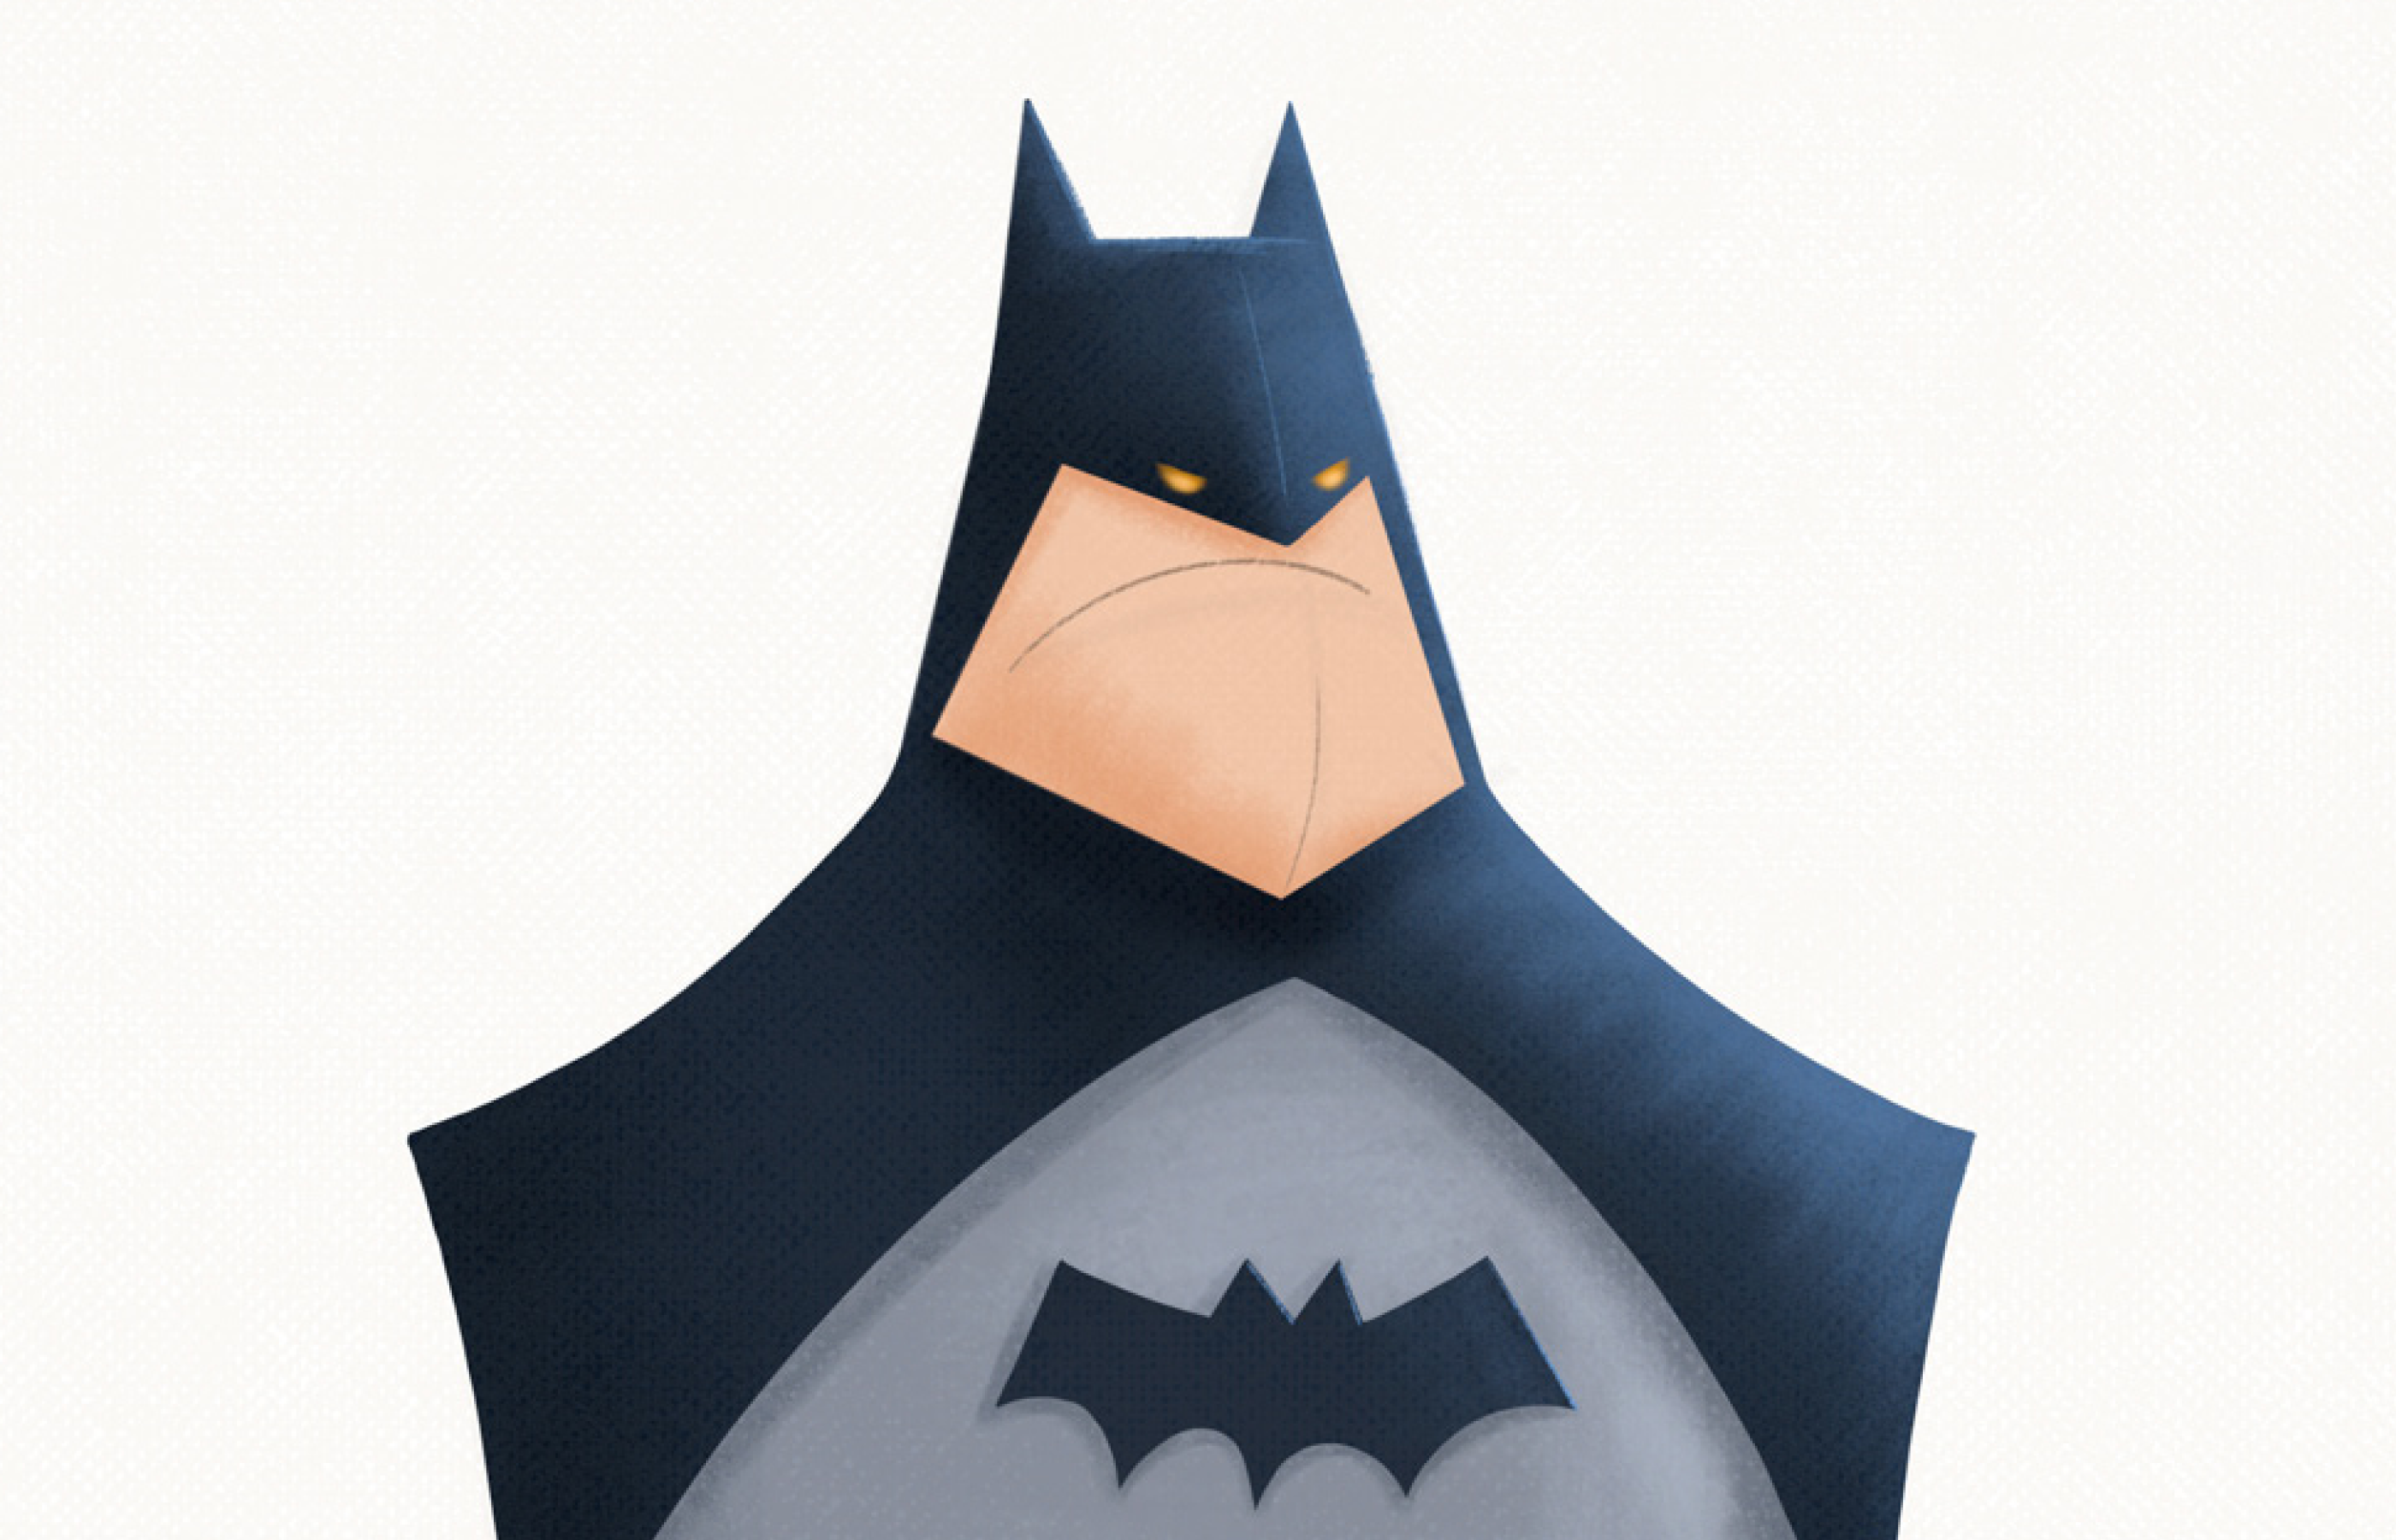 Imagining the daily life of Batman - Batlife Illustrations